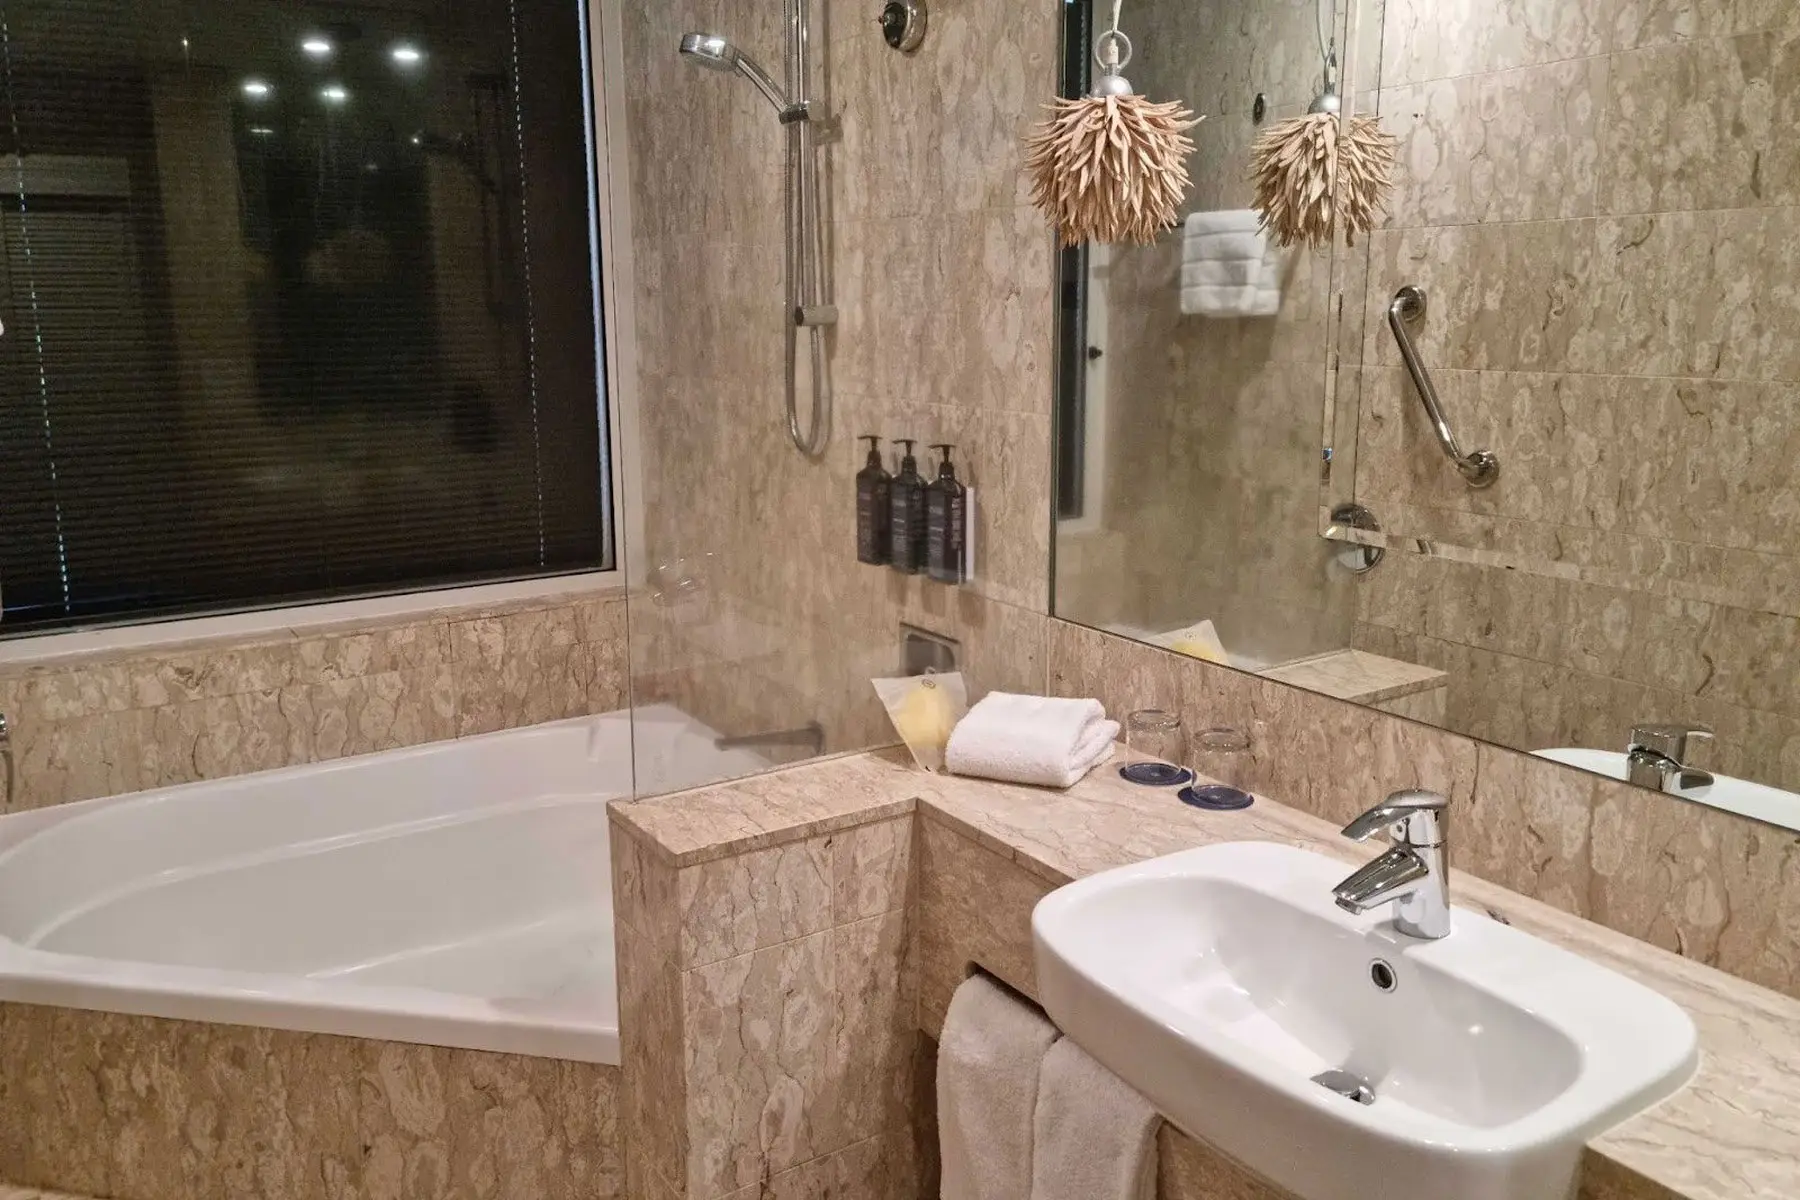 Sheraton Grand Mirage Resort bathroom